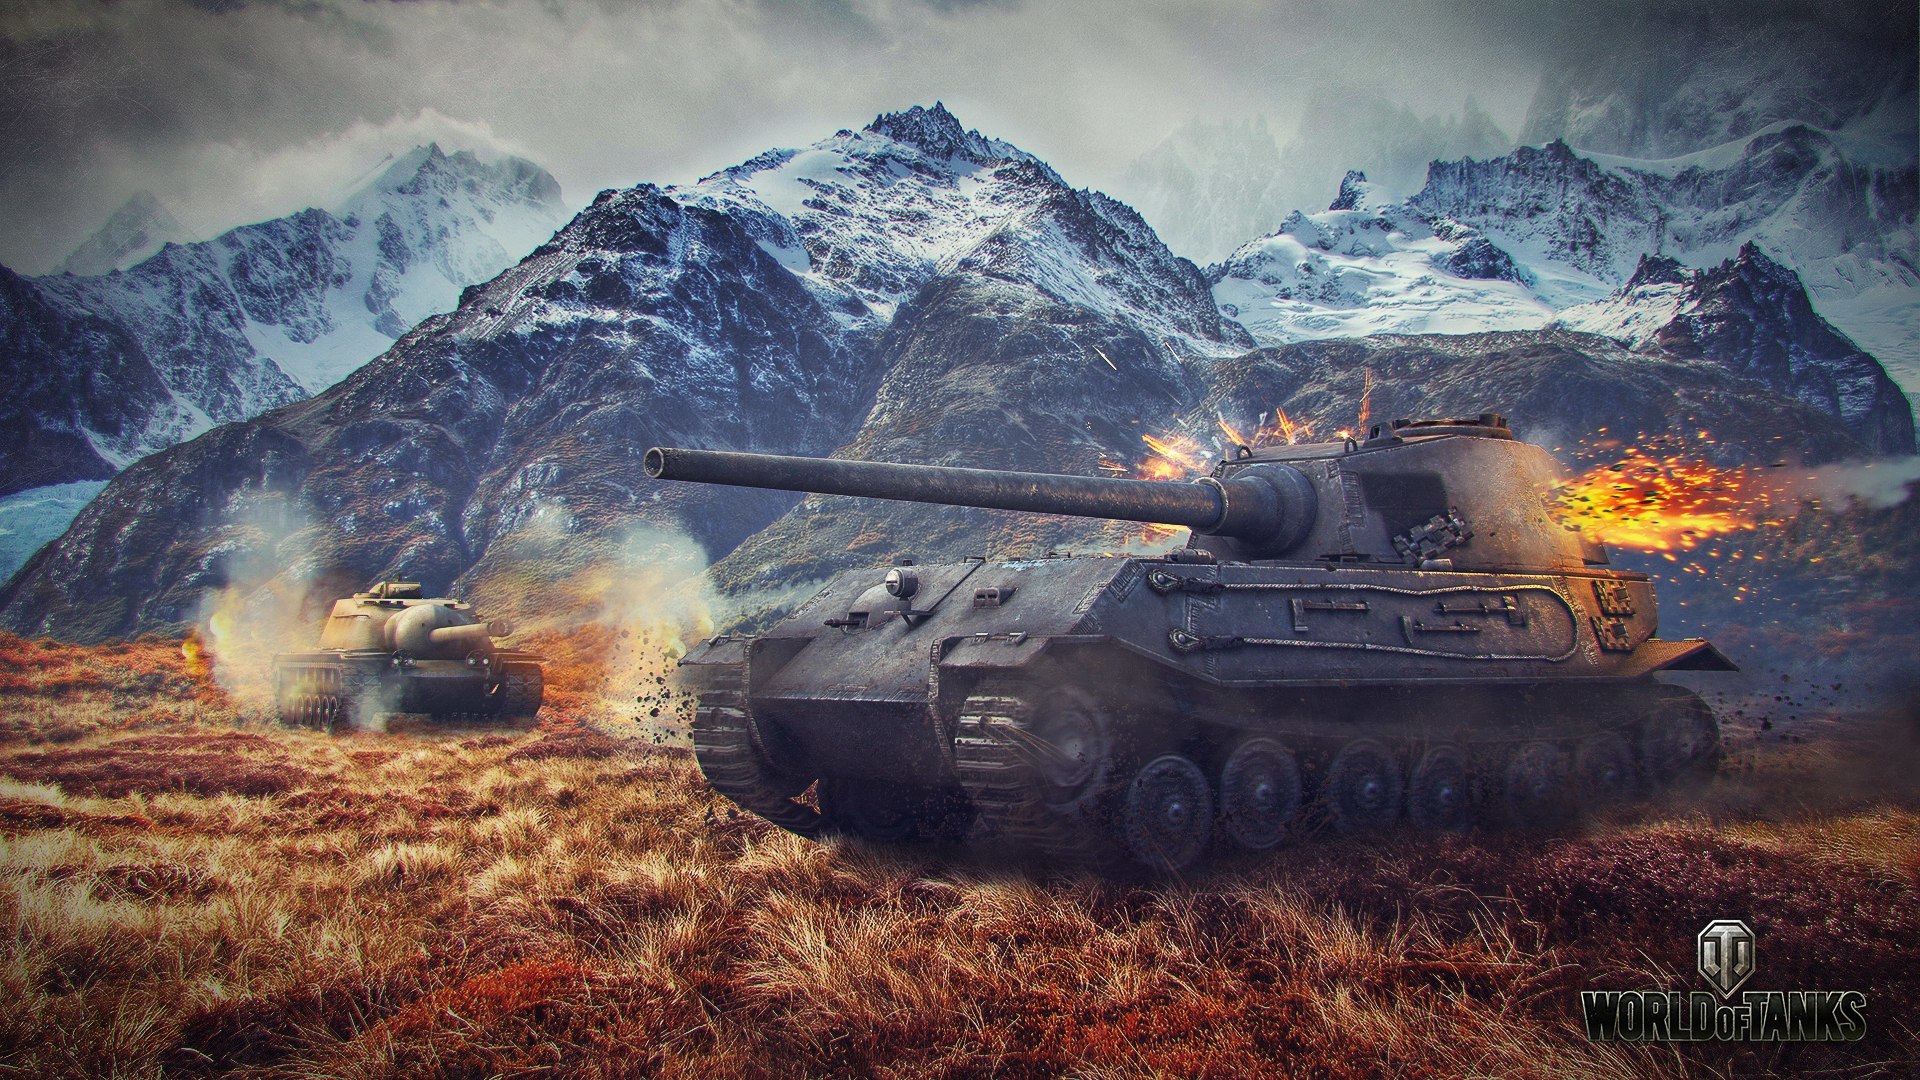 download the new version for apple Tank Battle : War Commander